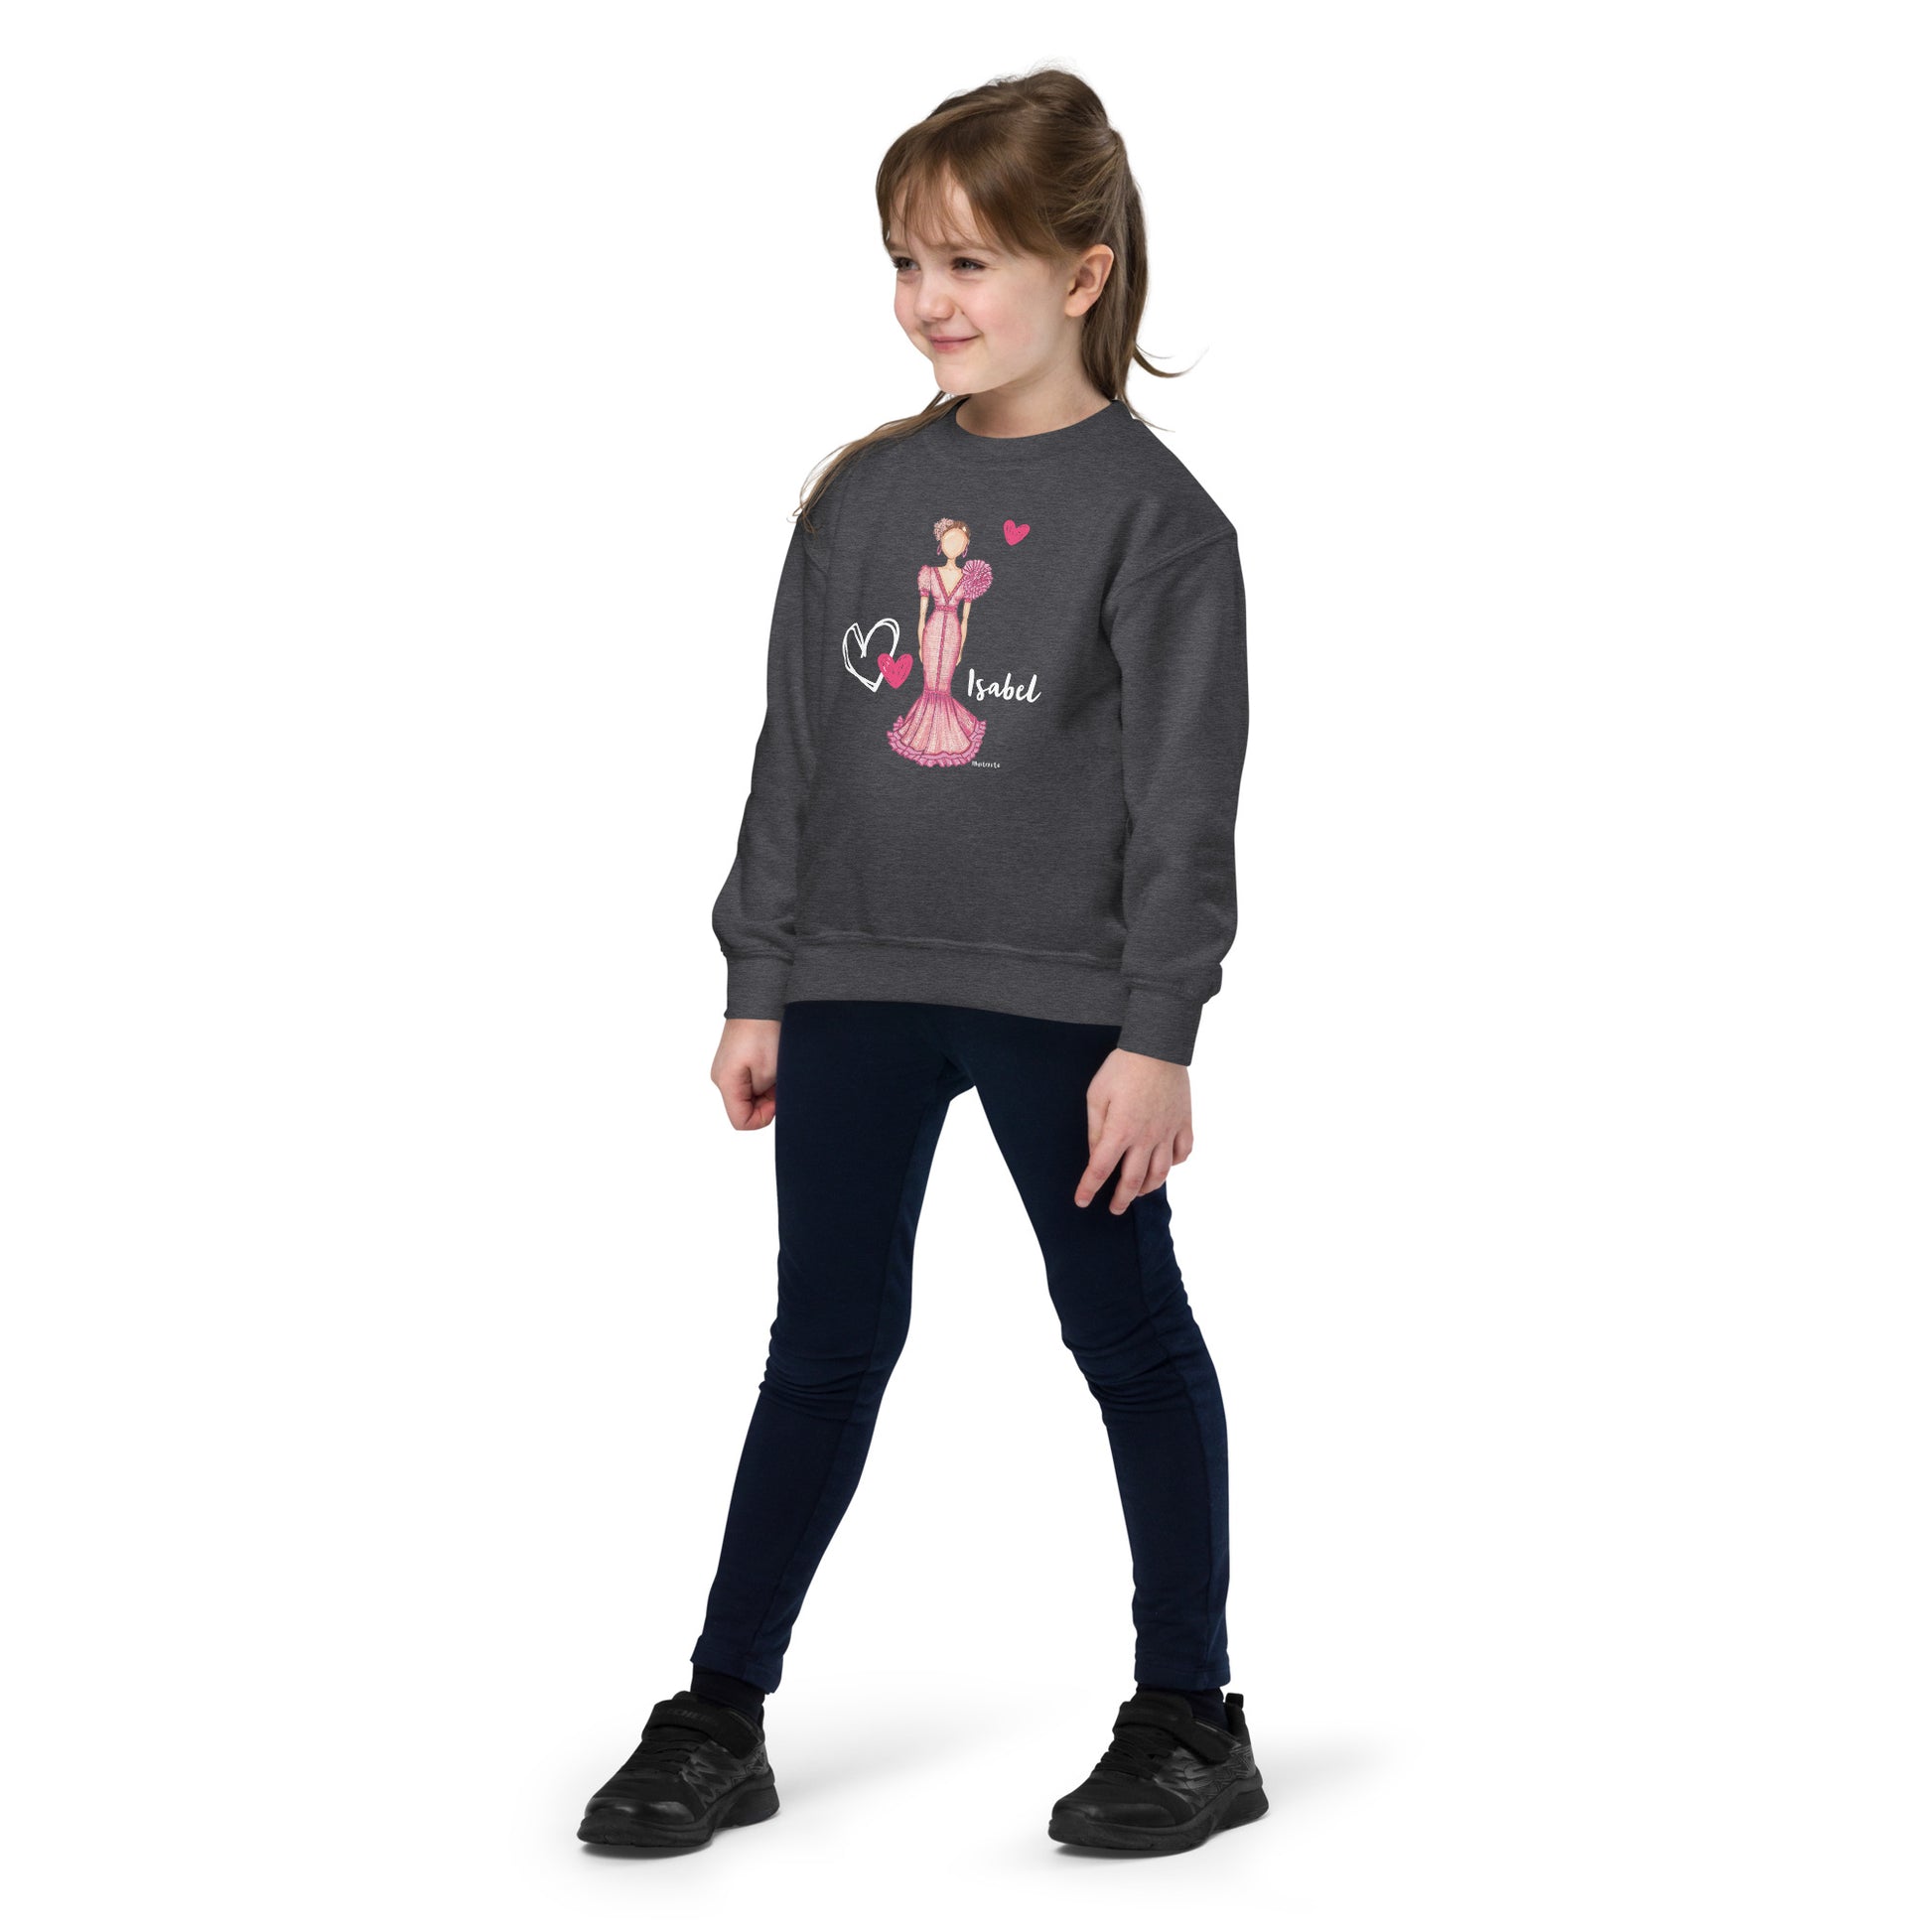 a little girl wearing a sweatshirt and leggings